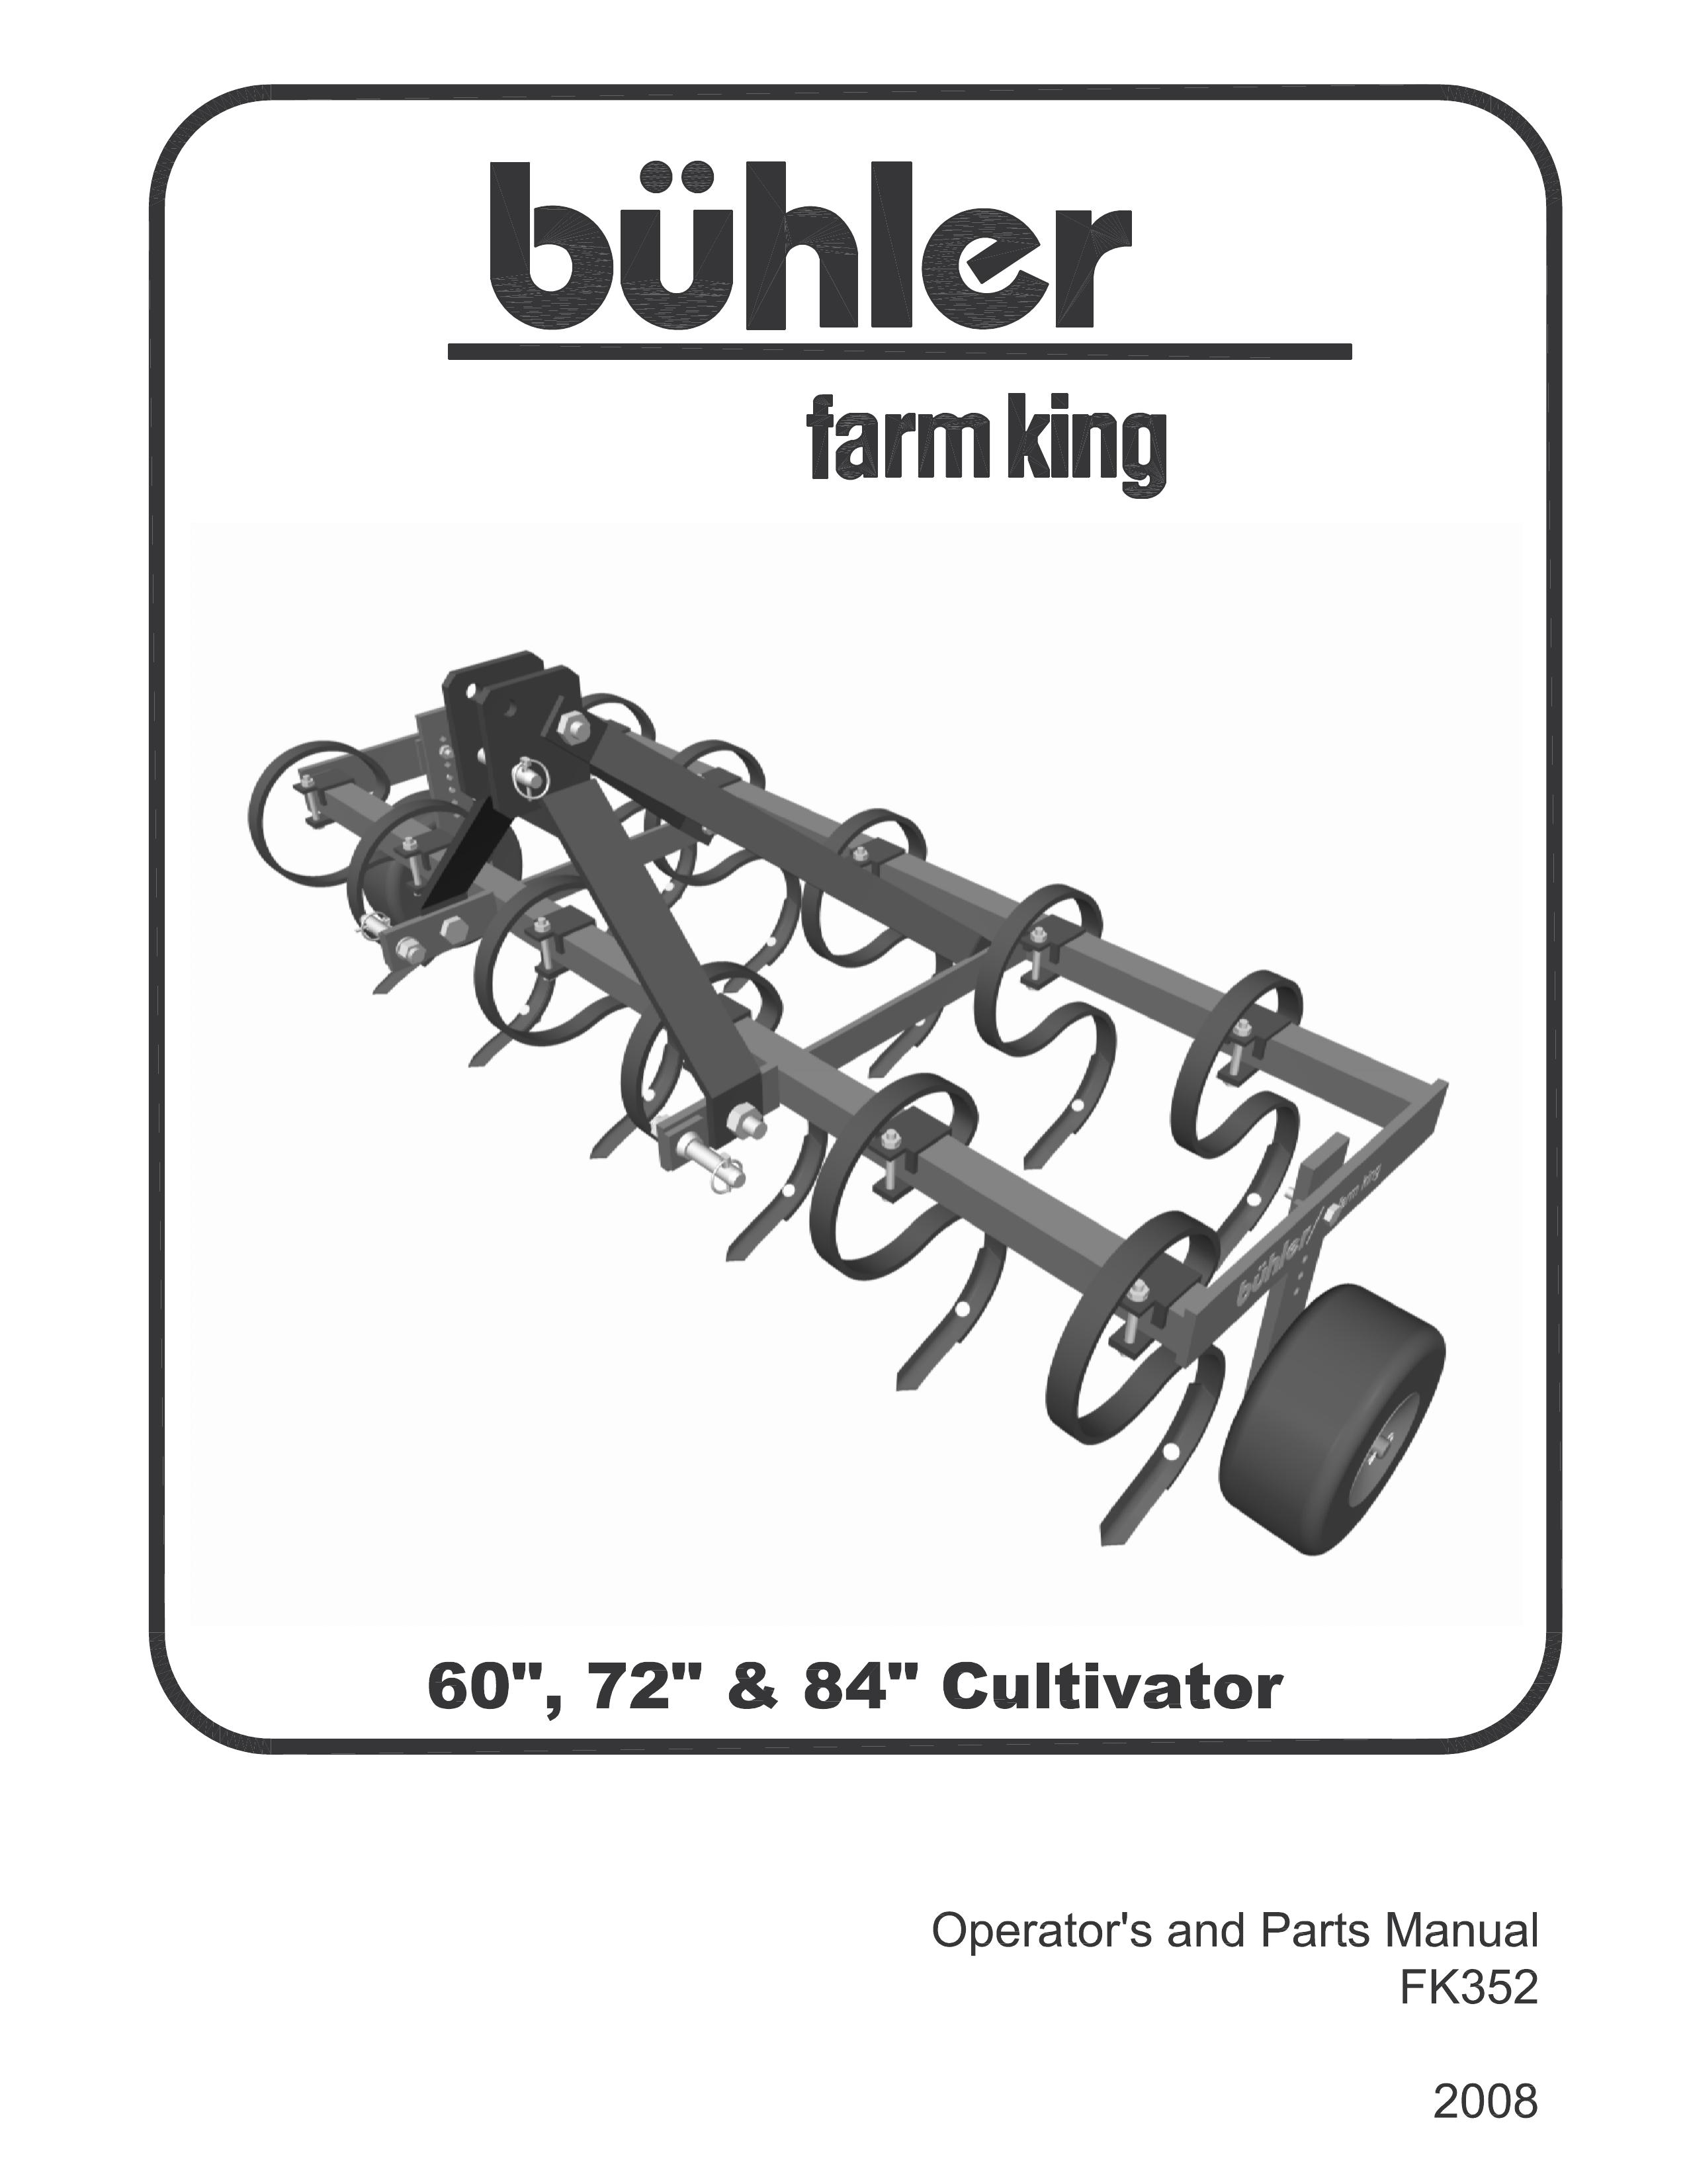 Buhler FK352 Cultivator User Manual